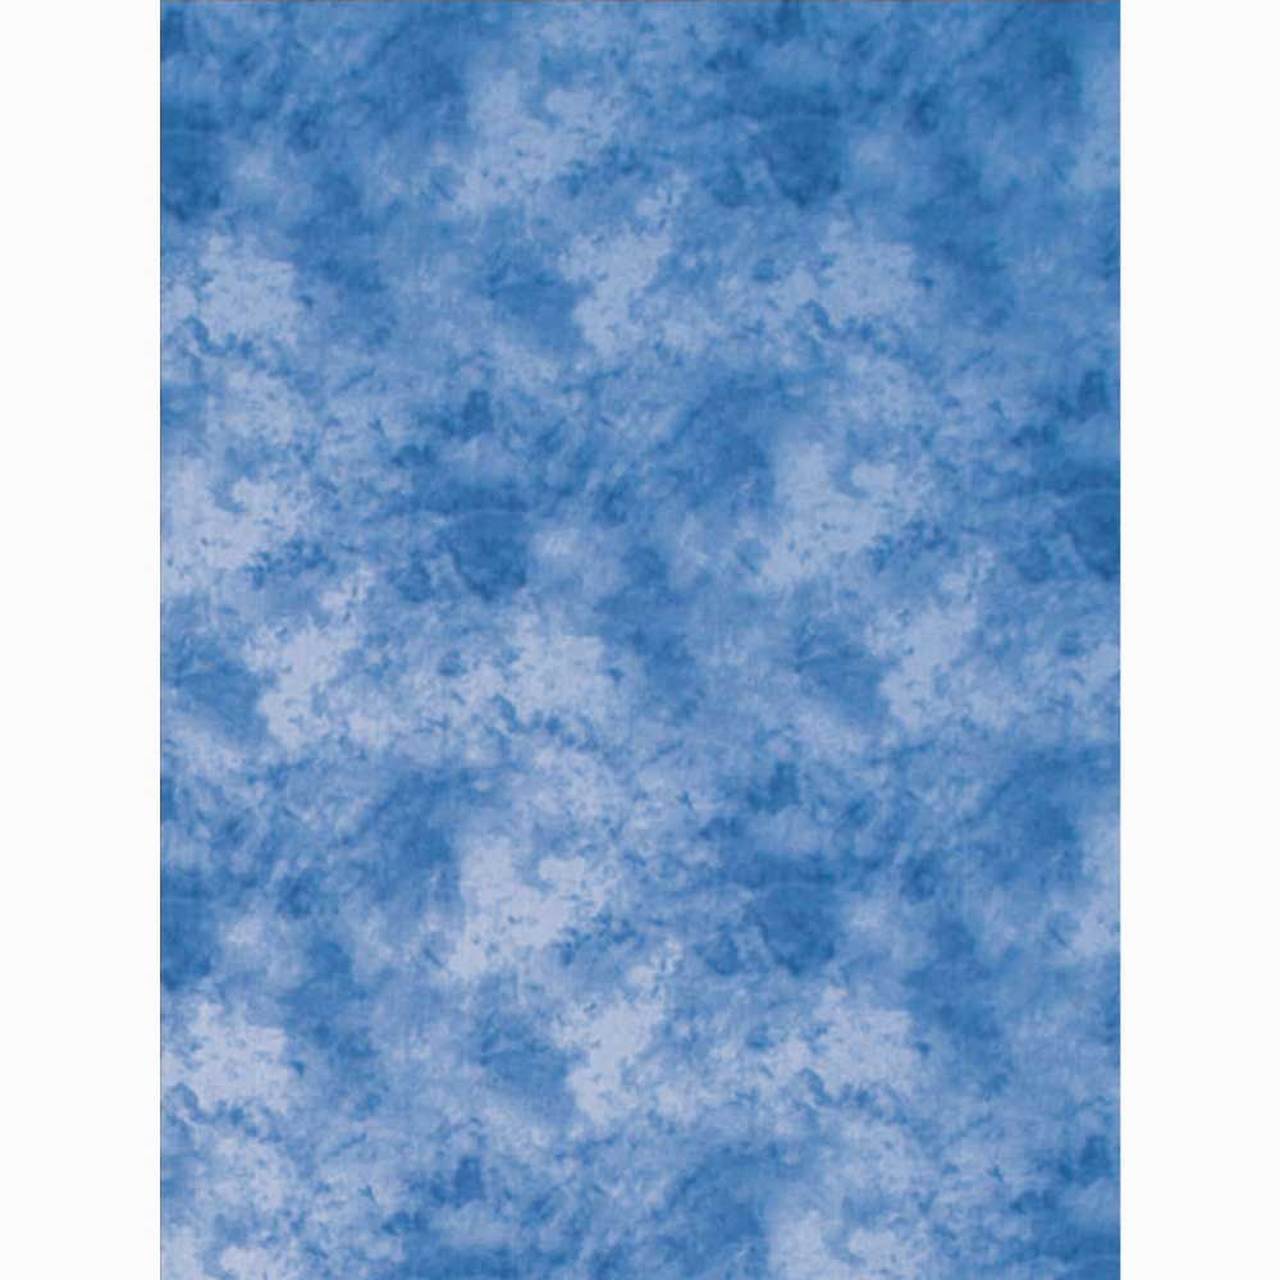 Promaster 9192 10x12' Cloud Dyed Cloth Background (Medium Blue)